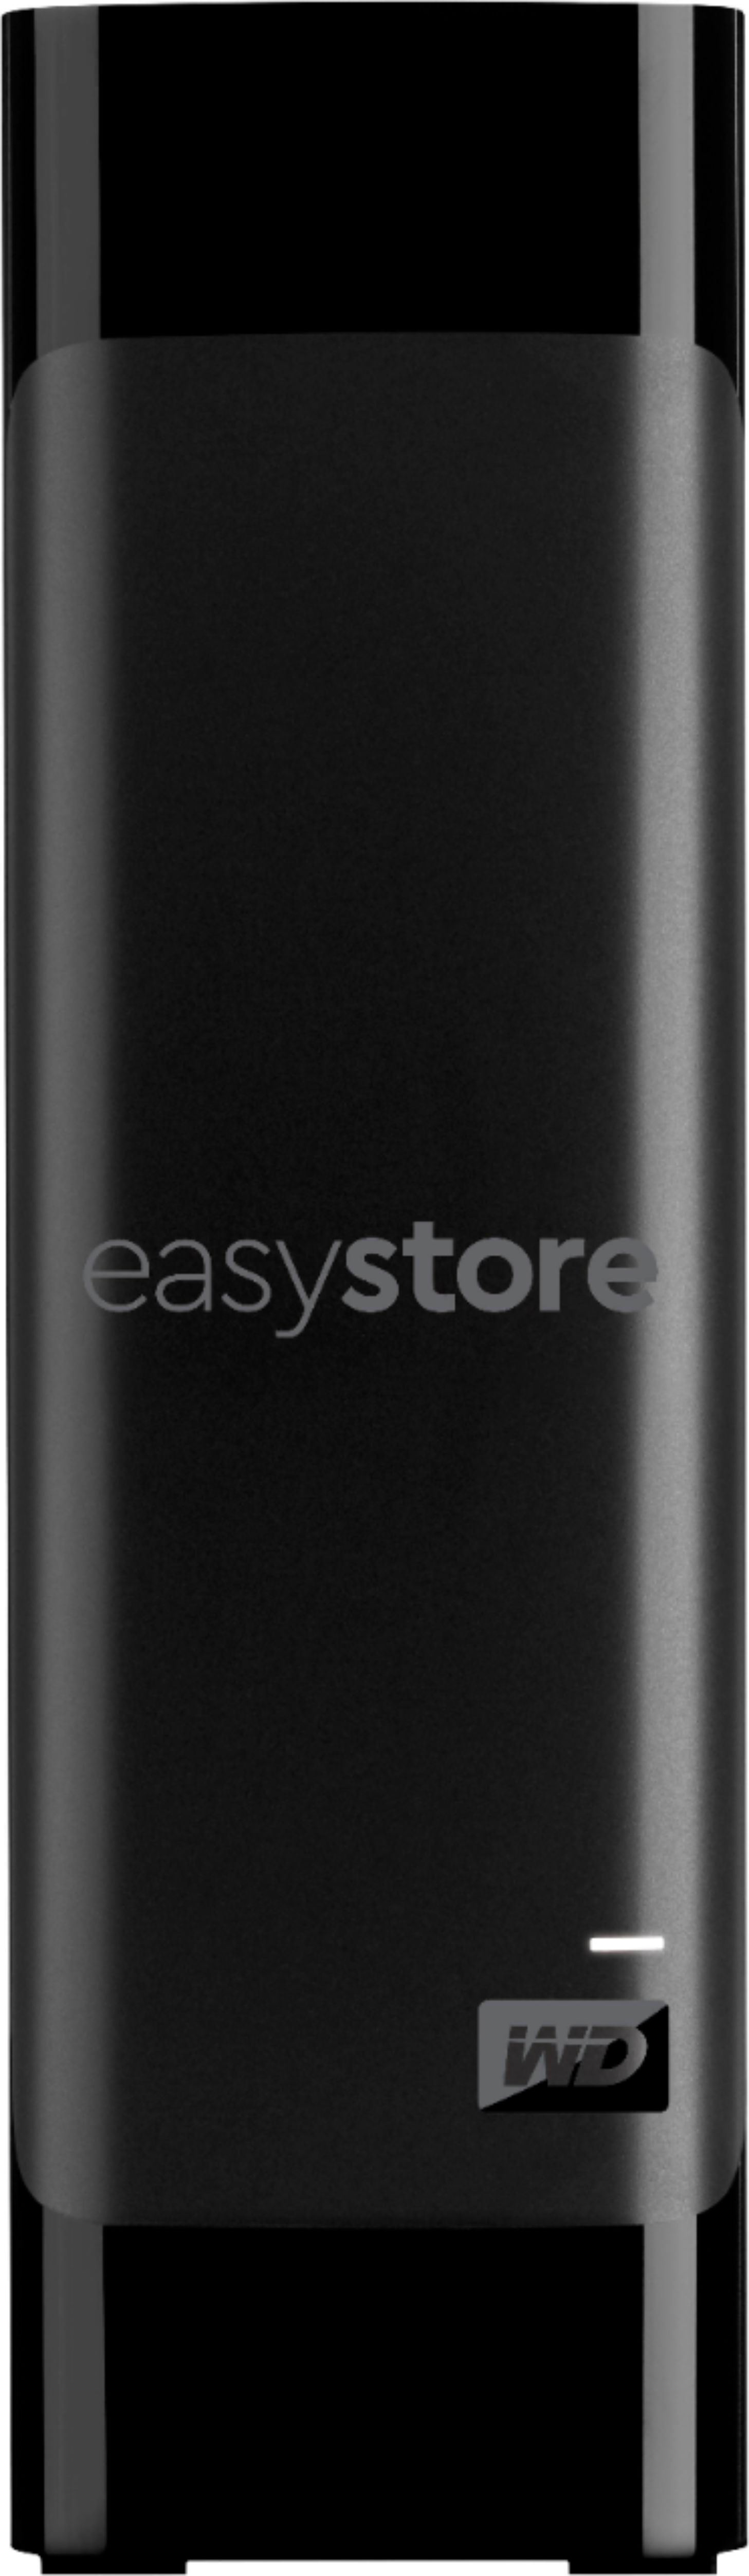 16TB WD easystore Desktop Hard Drive $280 at Best Buy